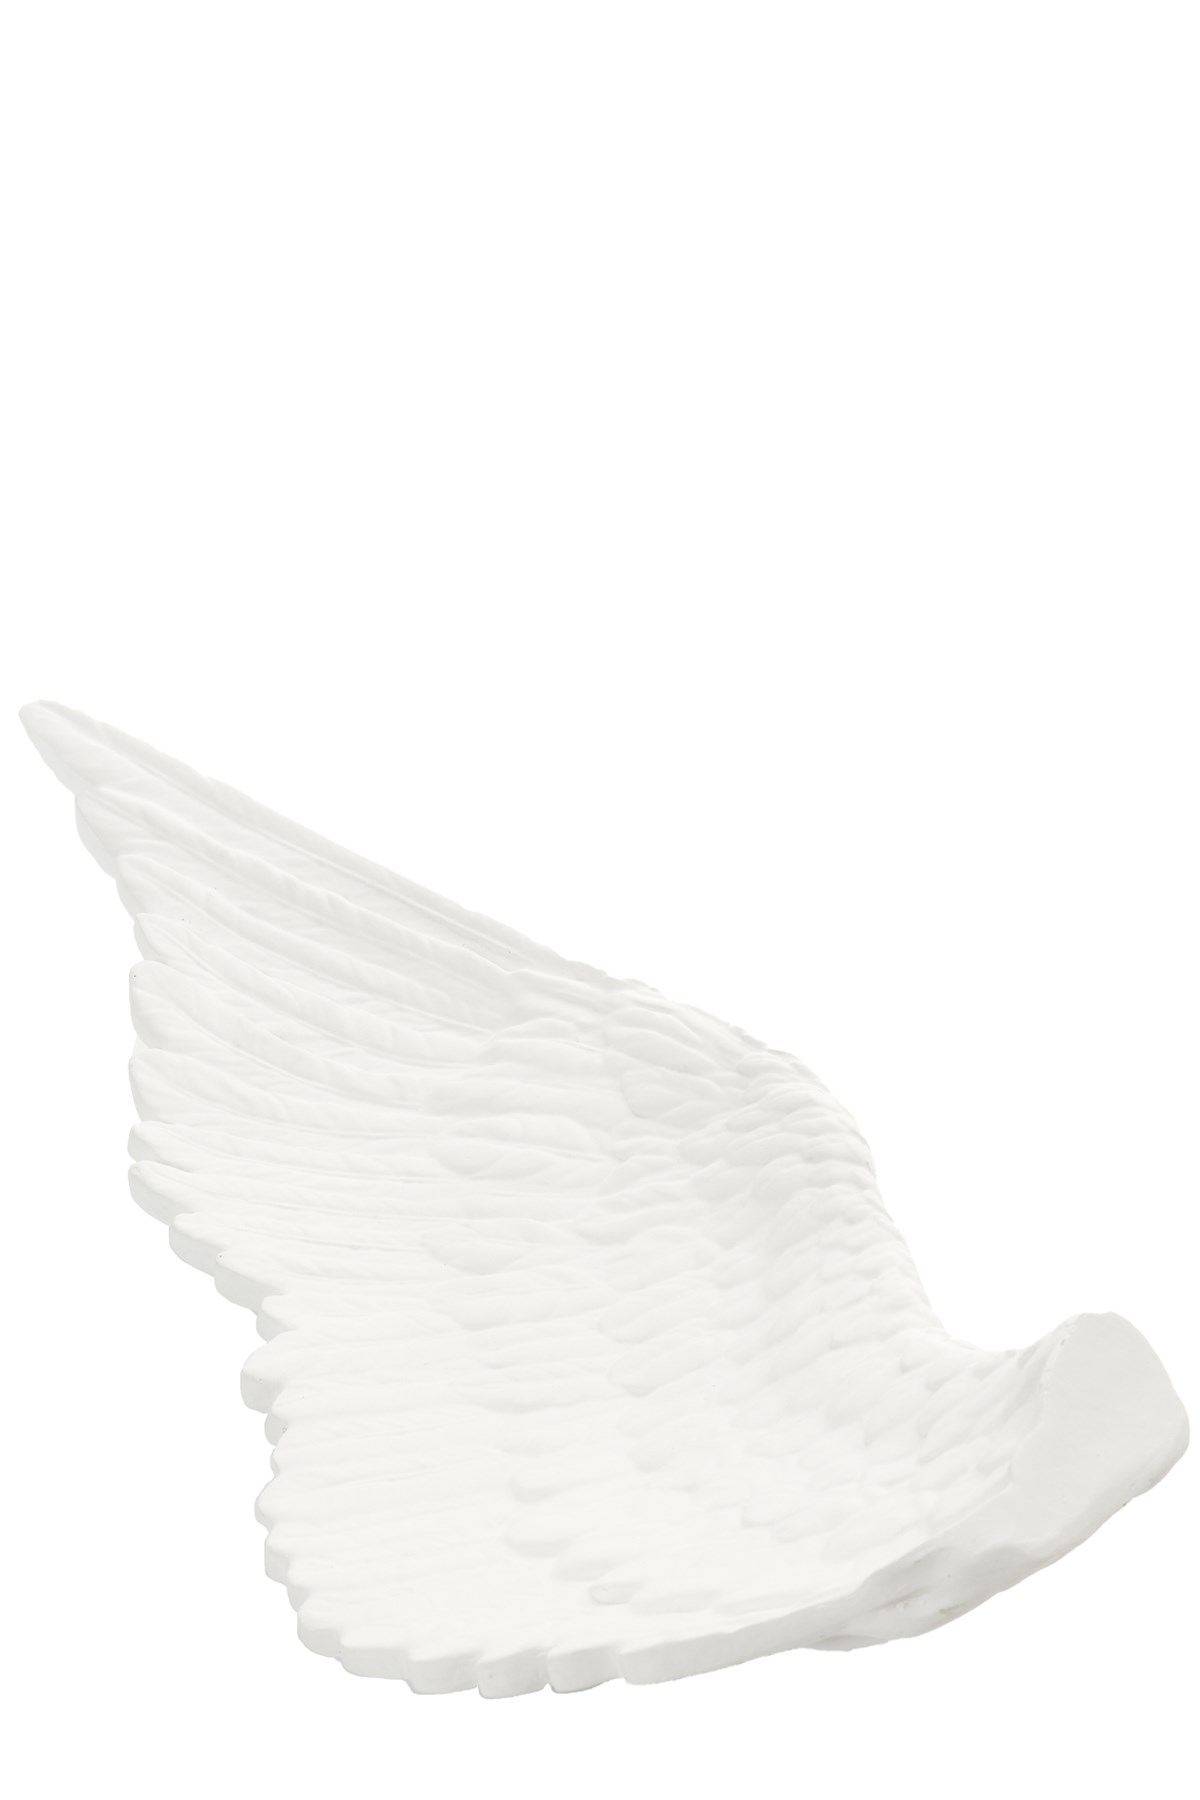 SELETTI 'Memorabiliamuseum - Wings Right' Centerpiece